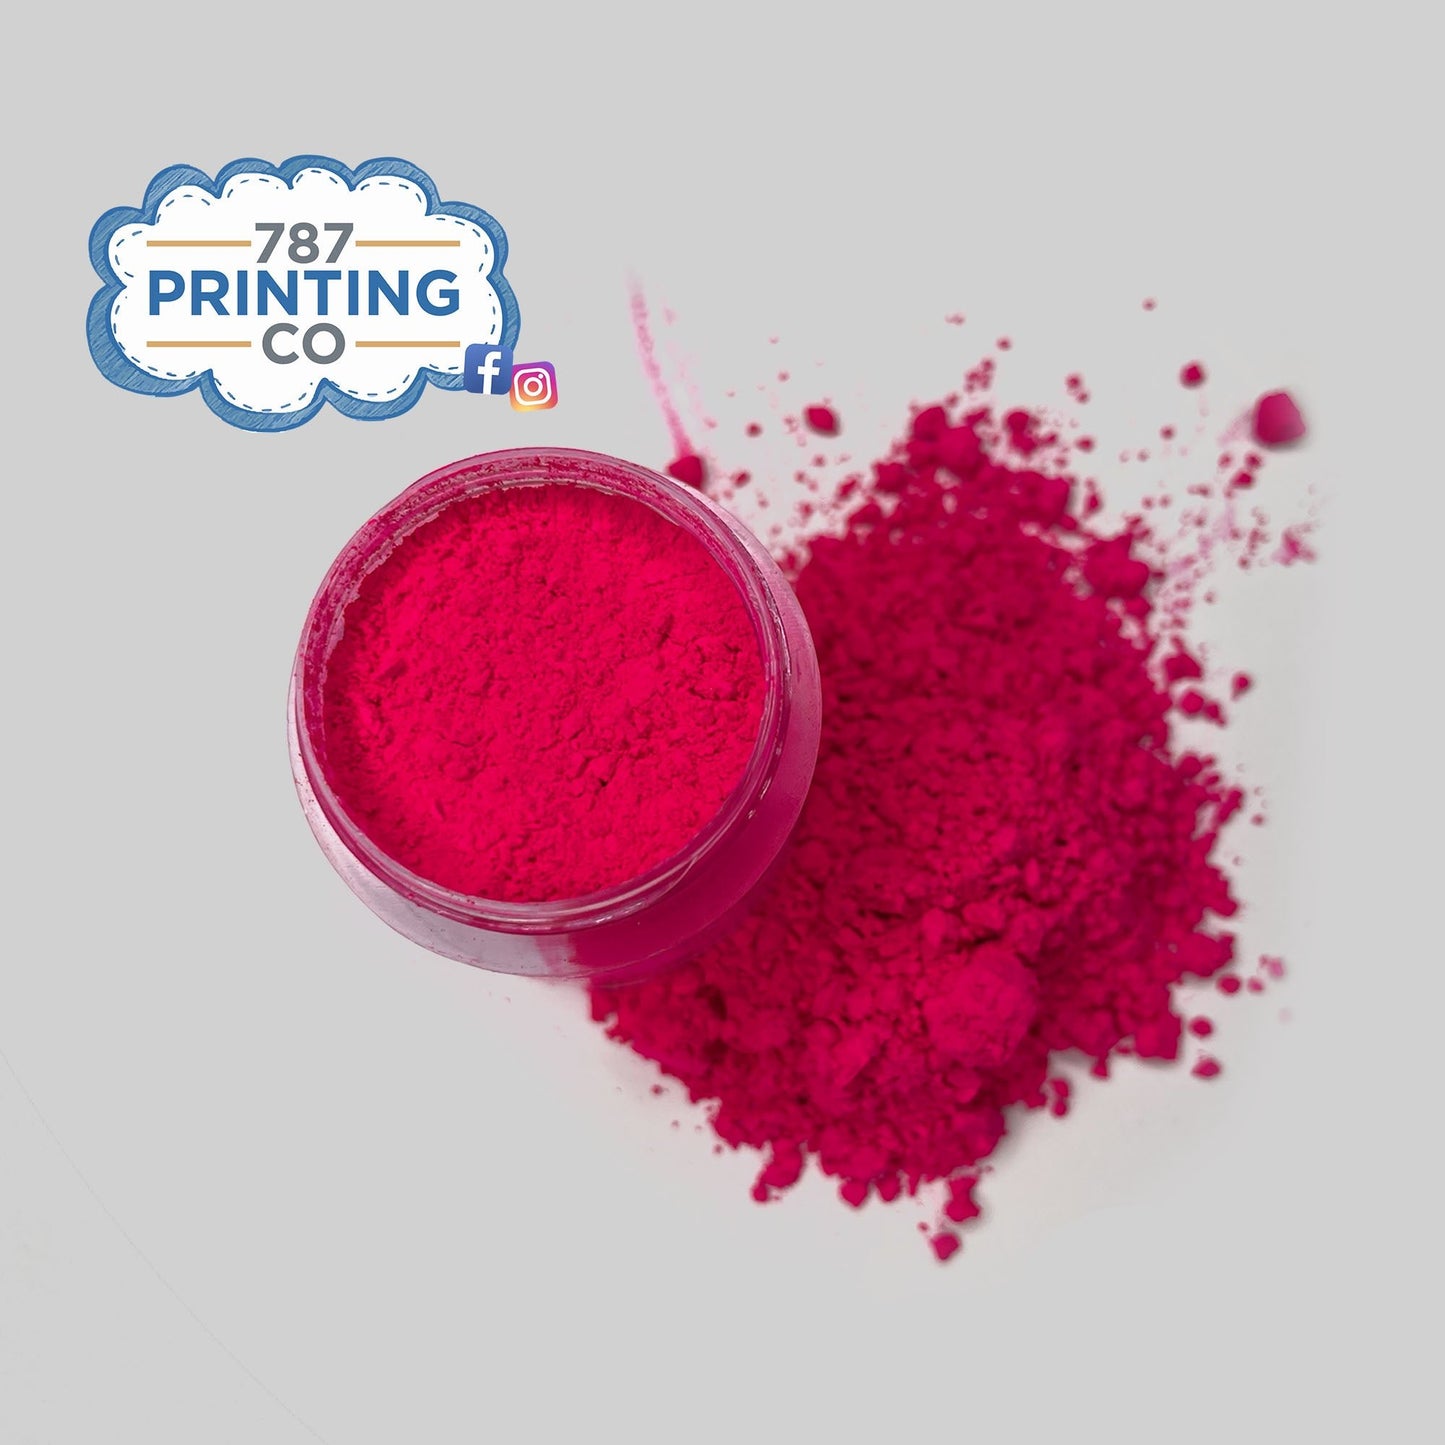 Neon Powder Pigment - 787 Printing Co.